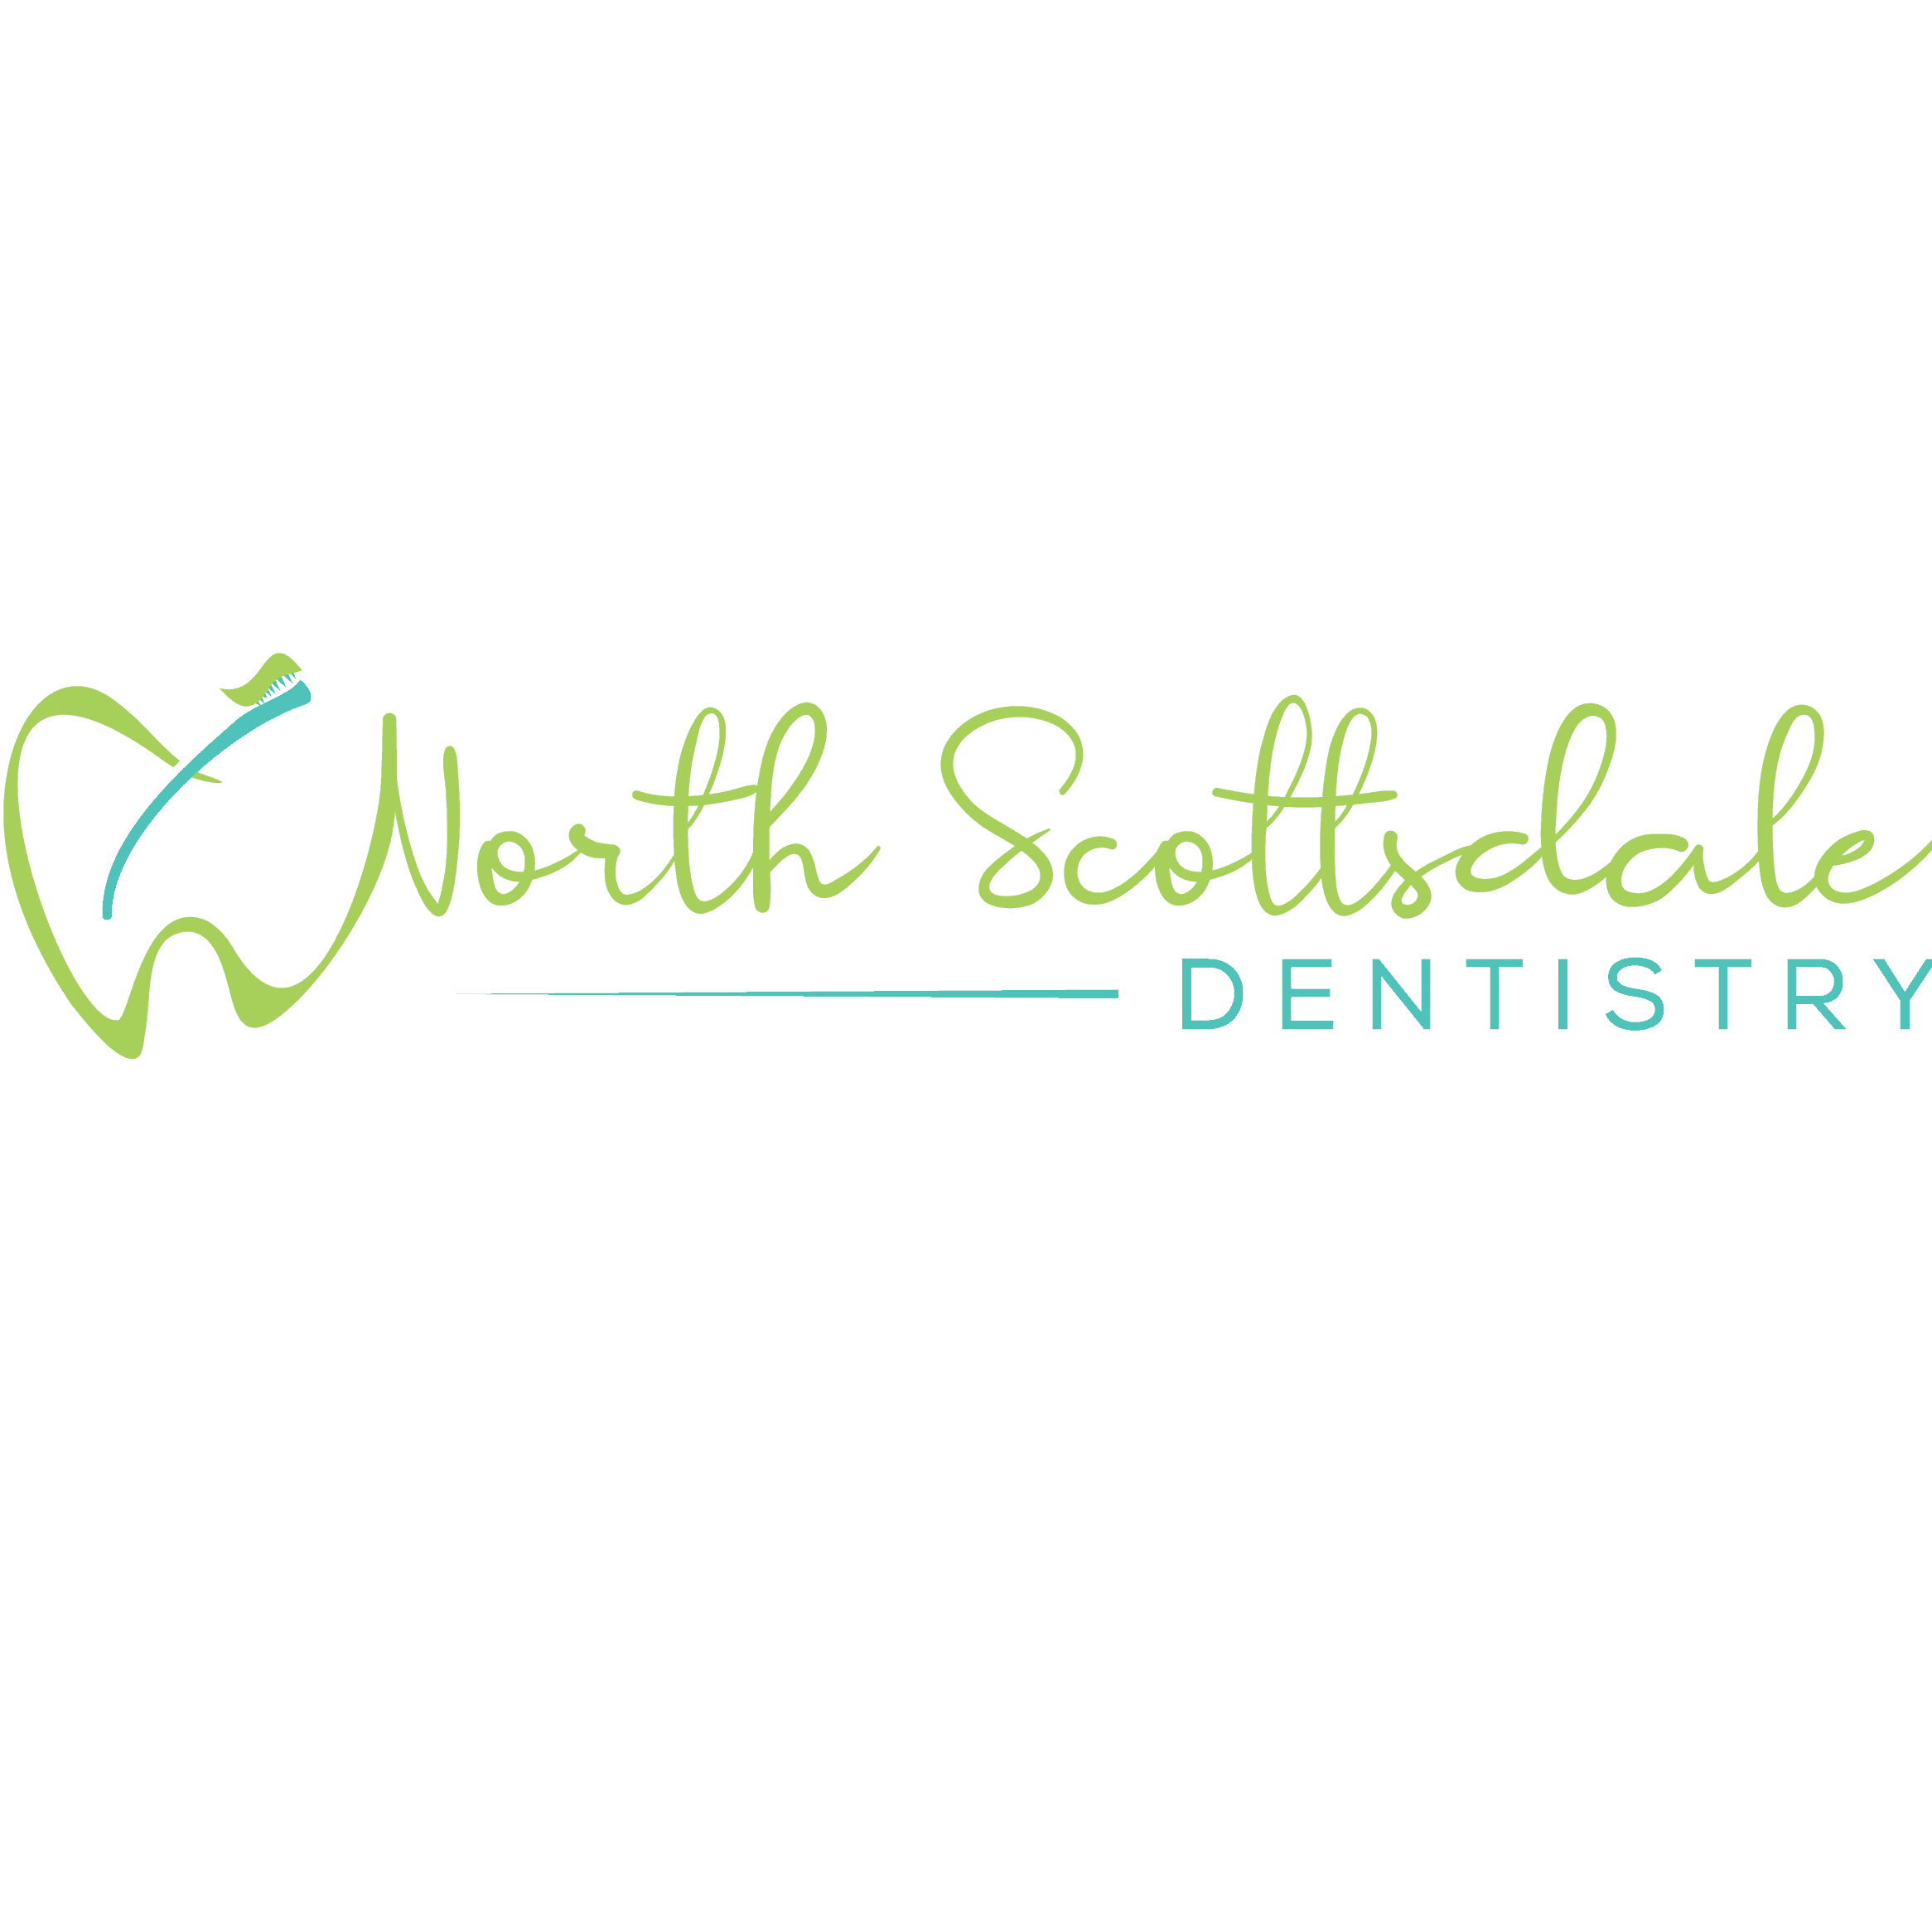 North Scottsdale Dentistry, US, invisalign & invisalign teen